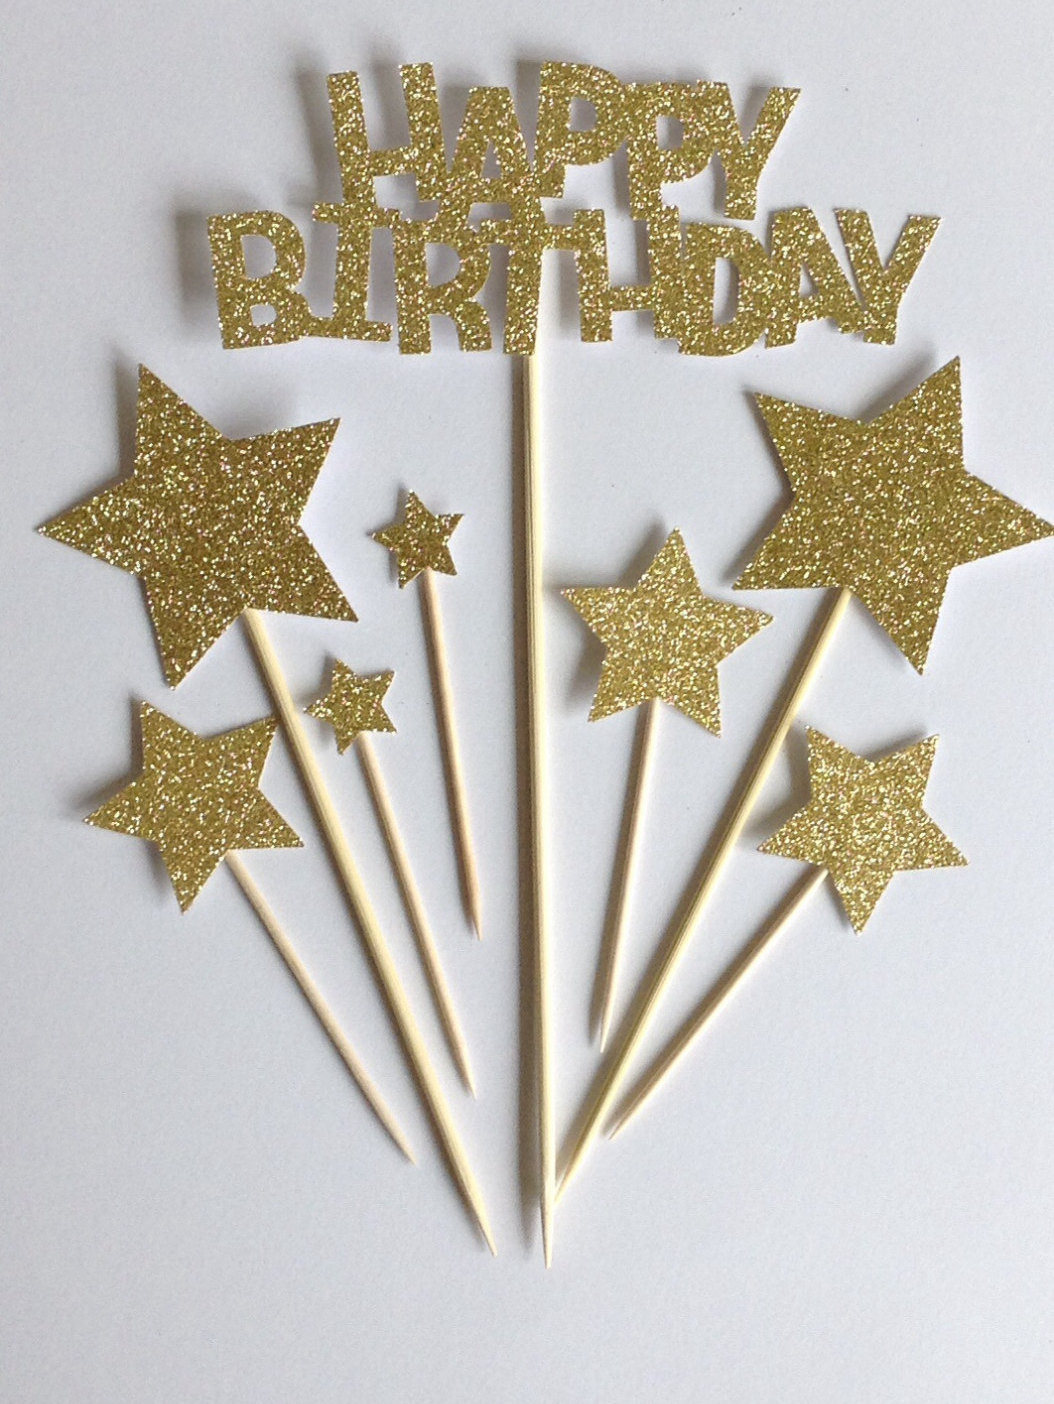 Best ideas about Gold Happy Birthday Cake Topper
. Save or Pin Gold Happy Birthday Cake Toppers Gold Glitter Birthday & Star Now.